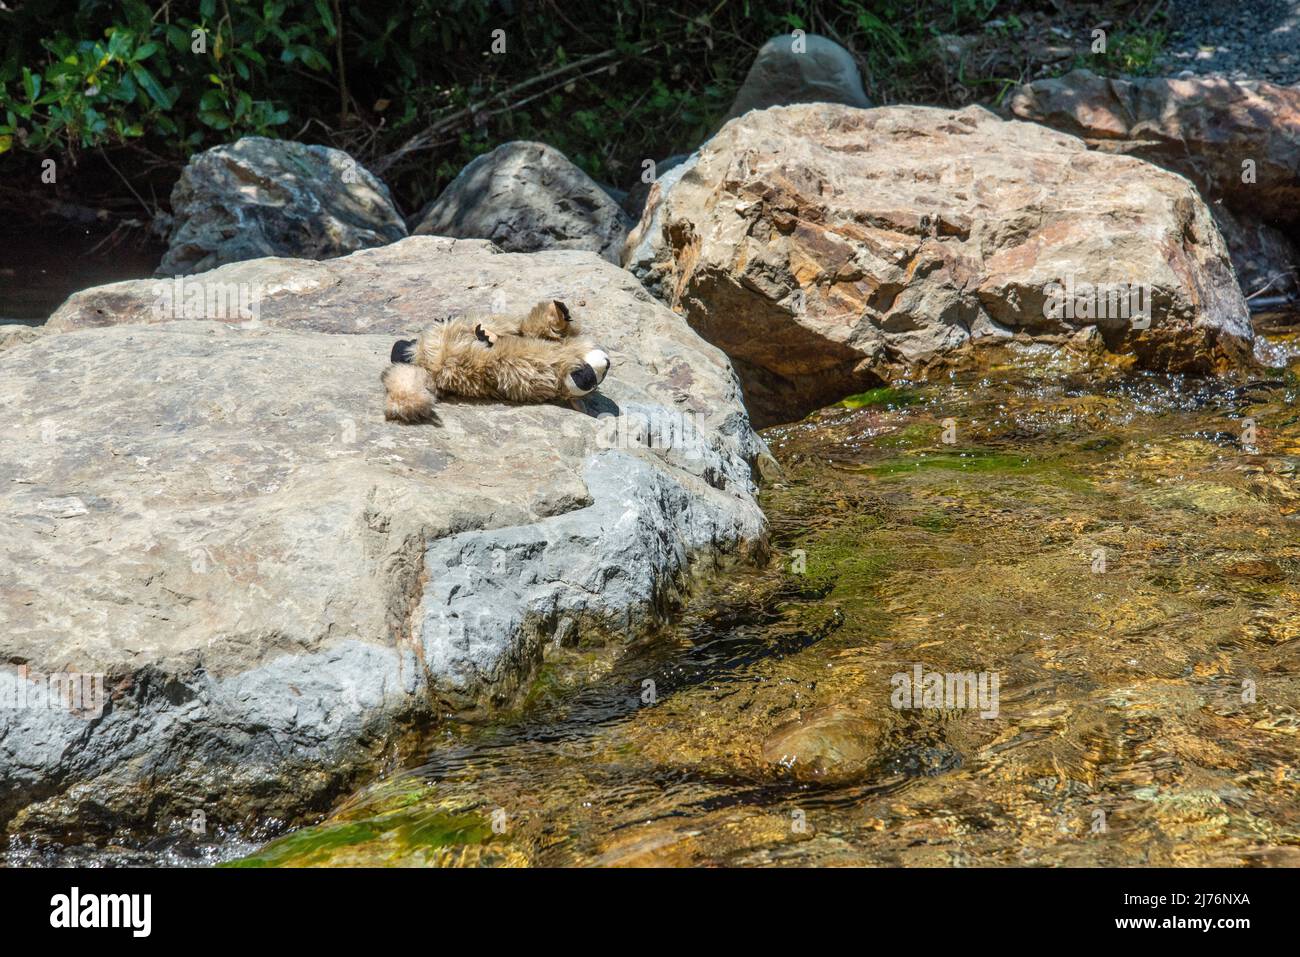 Stuffed animal having a sunbath on a stone near a river, Picton in New Zealand Stock Photo